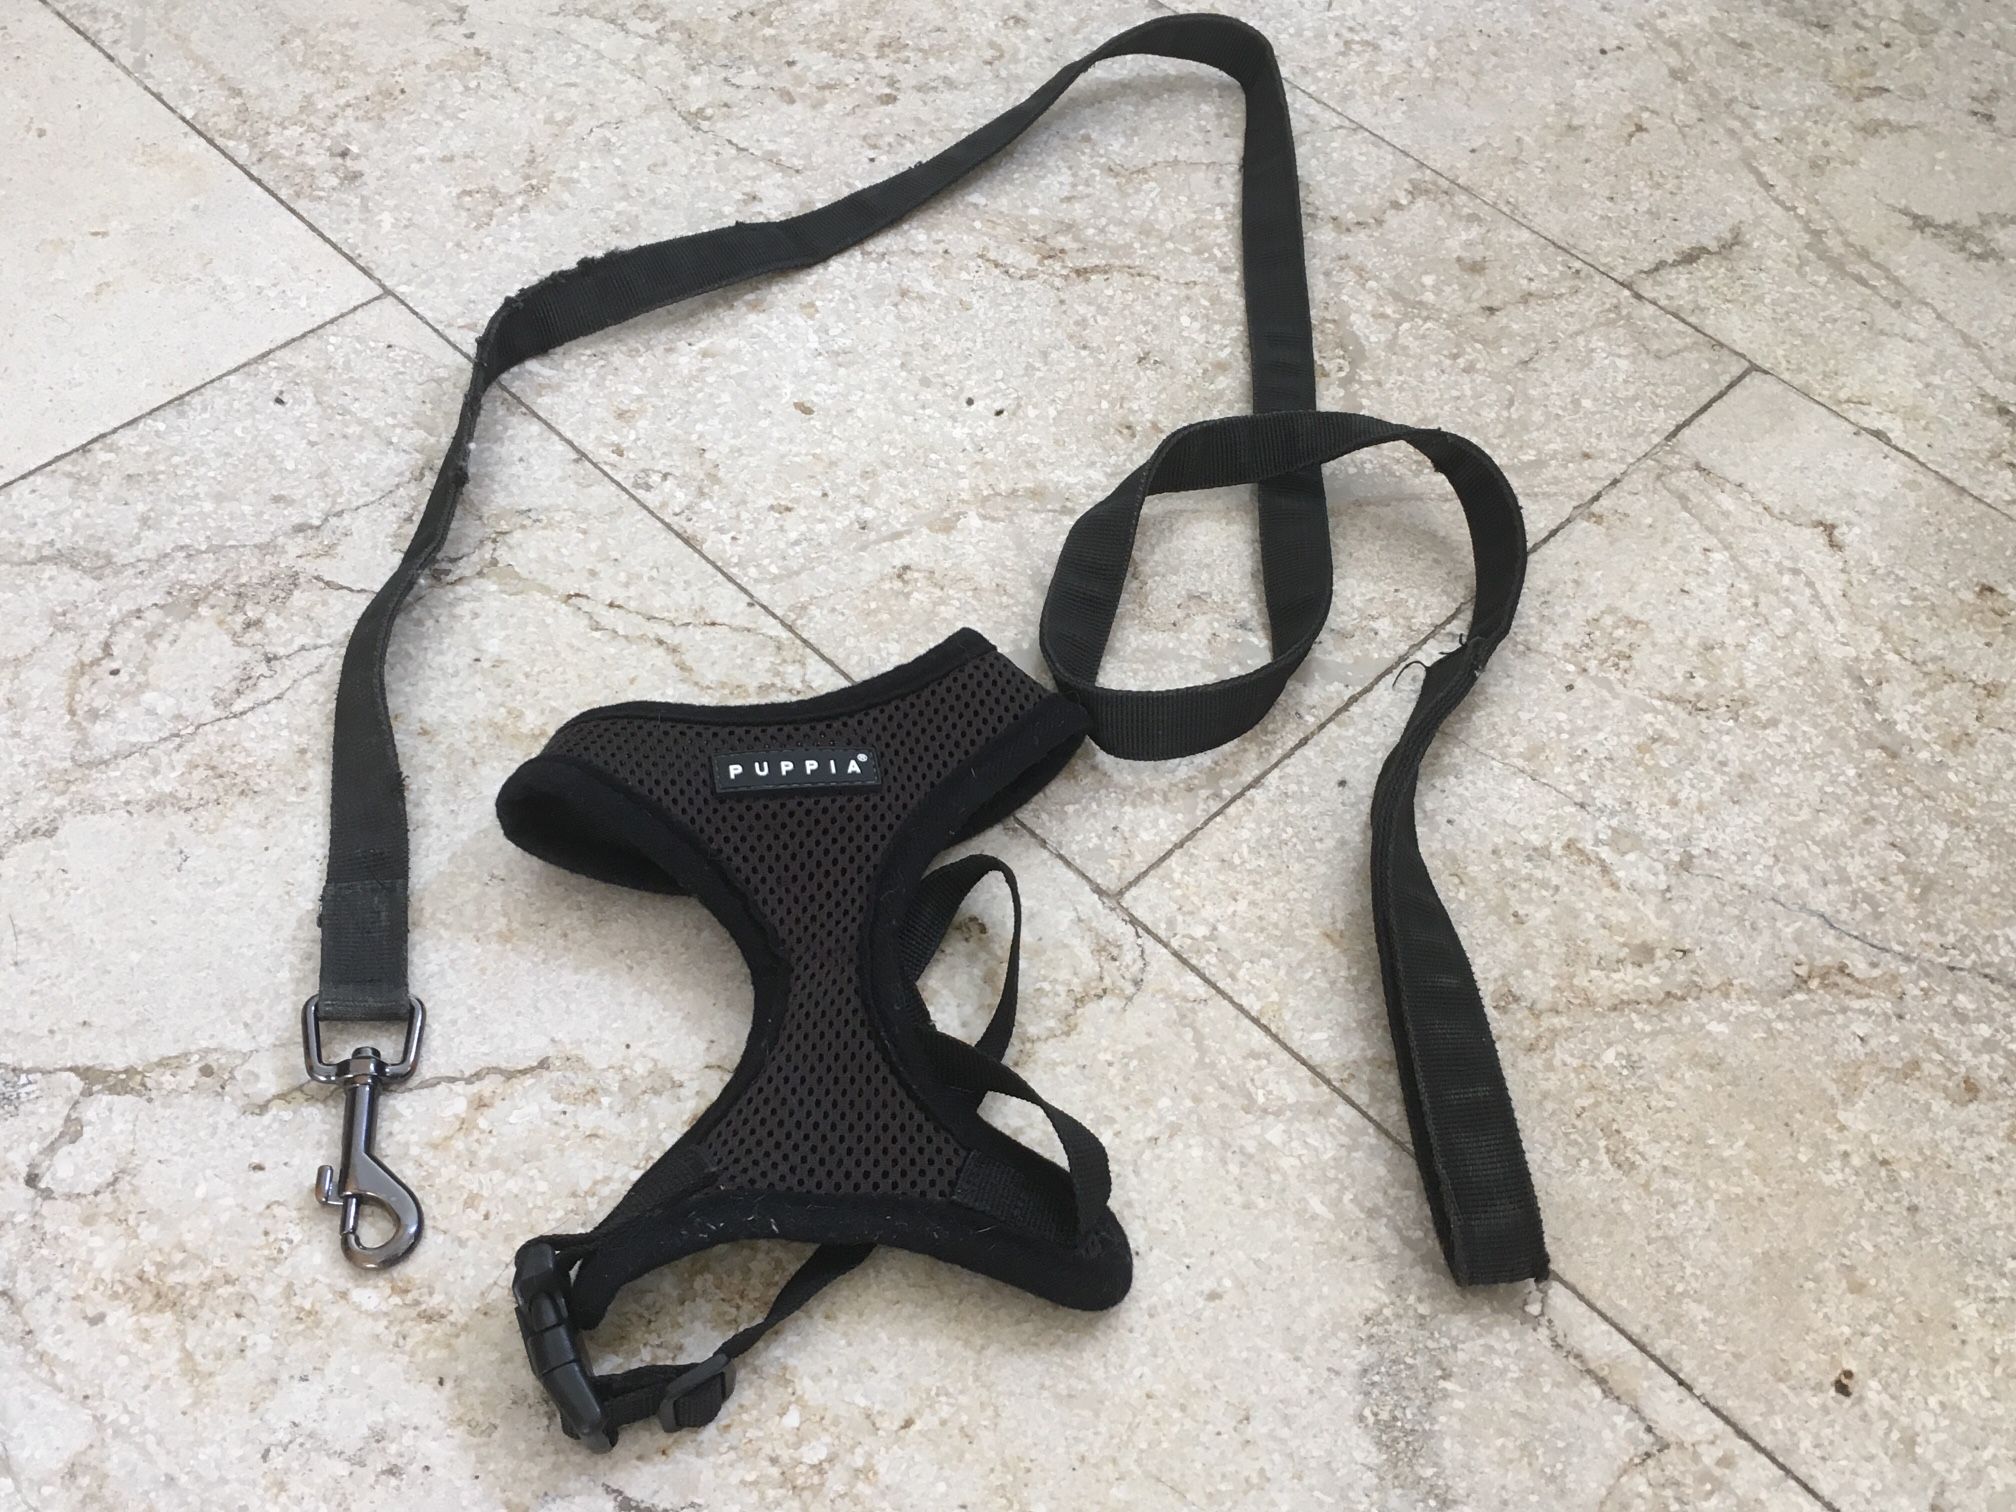 Puppia dog harness and leash set